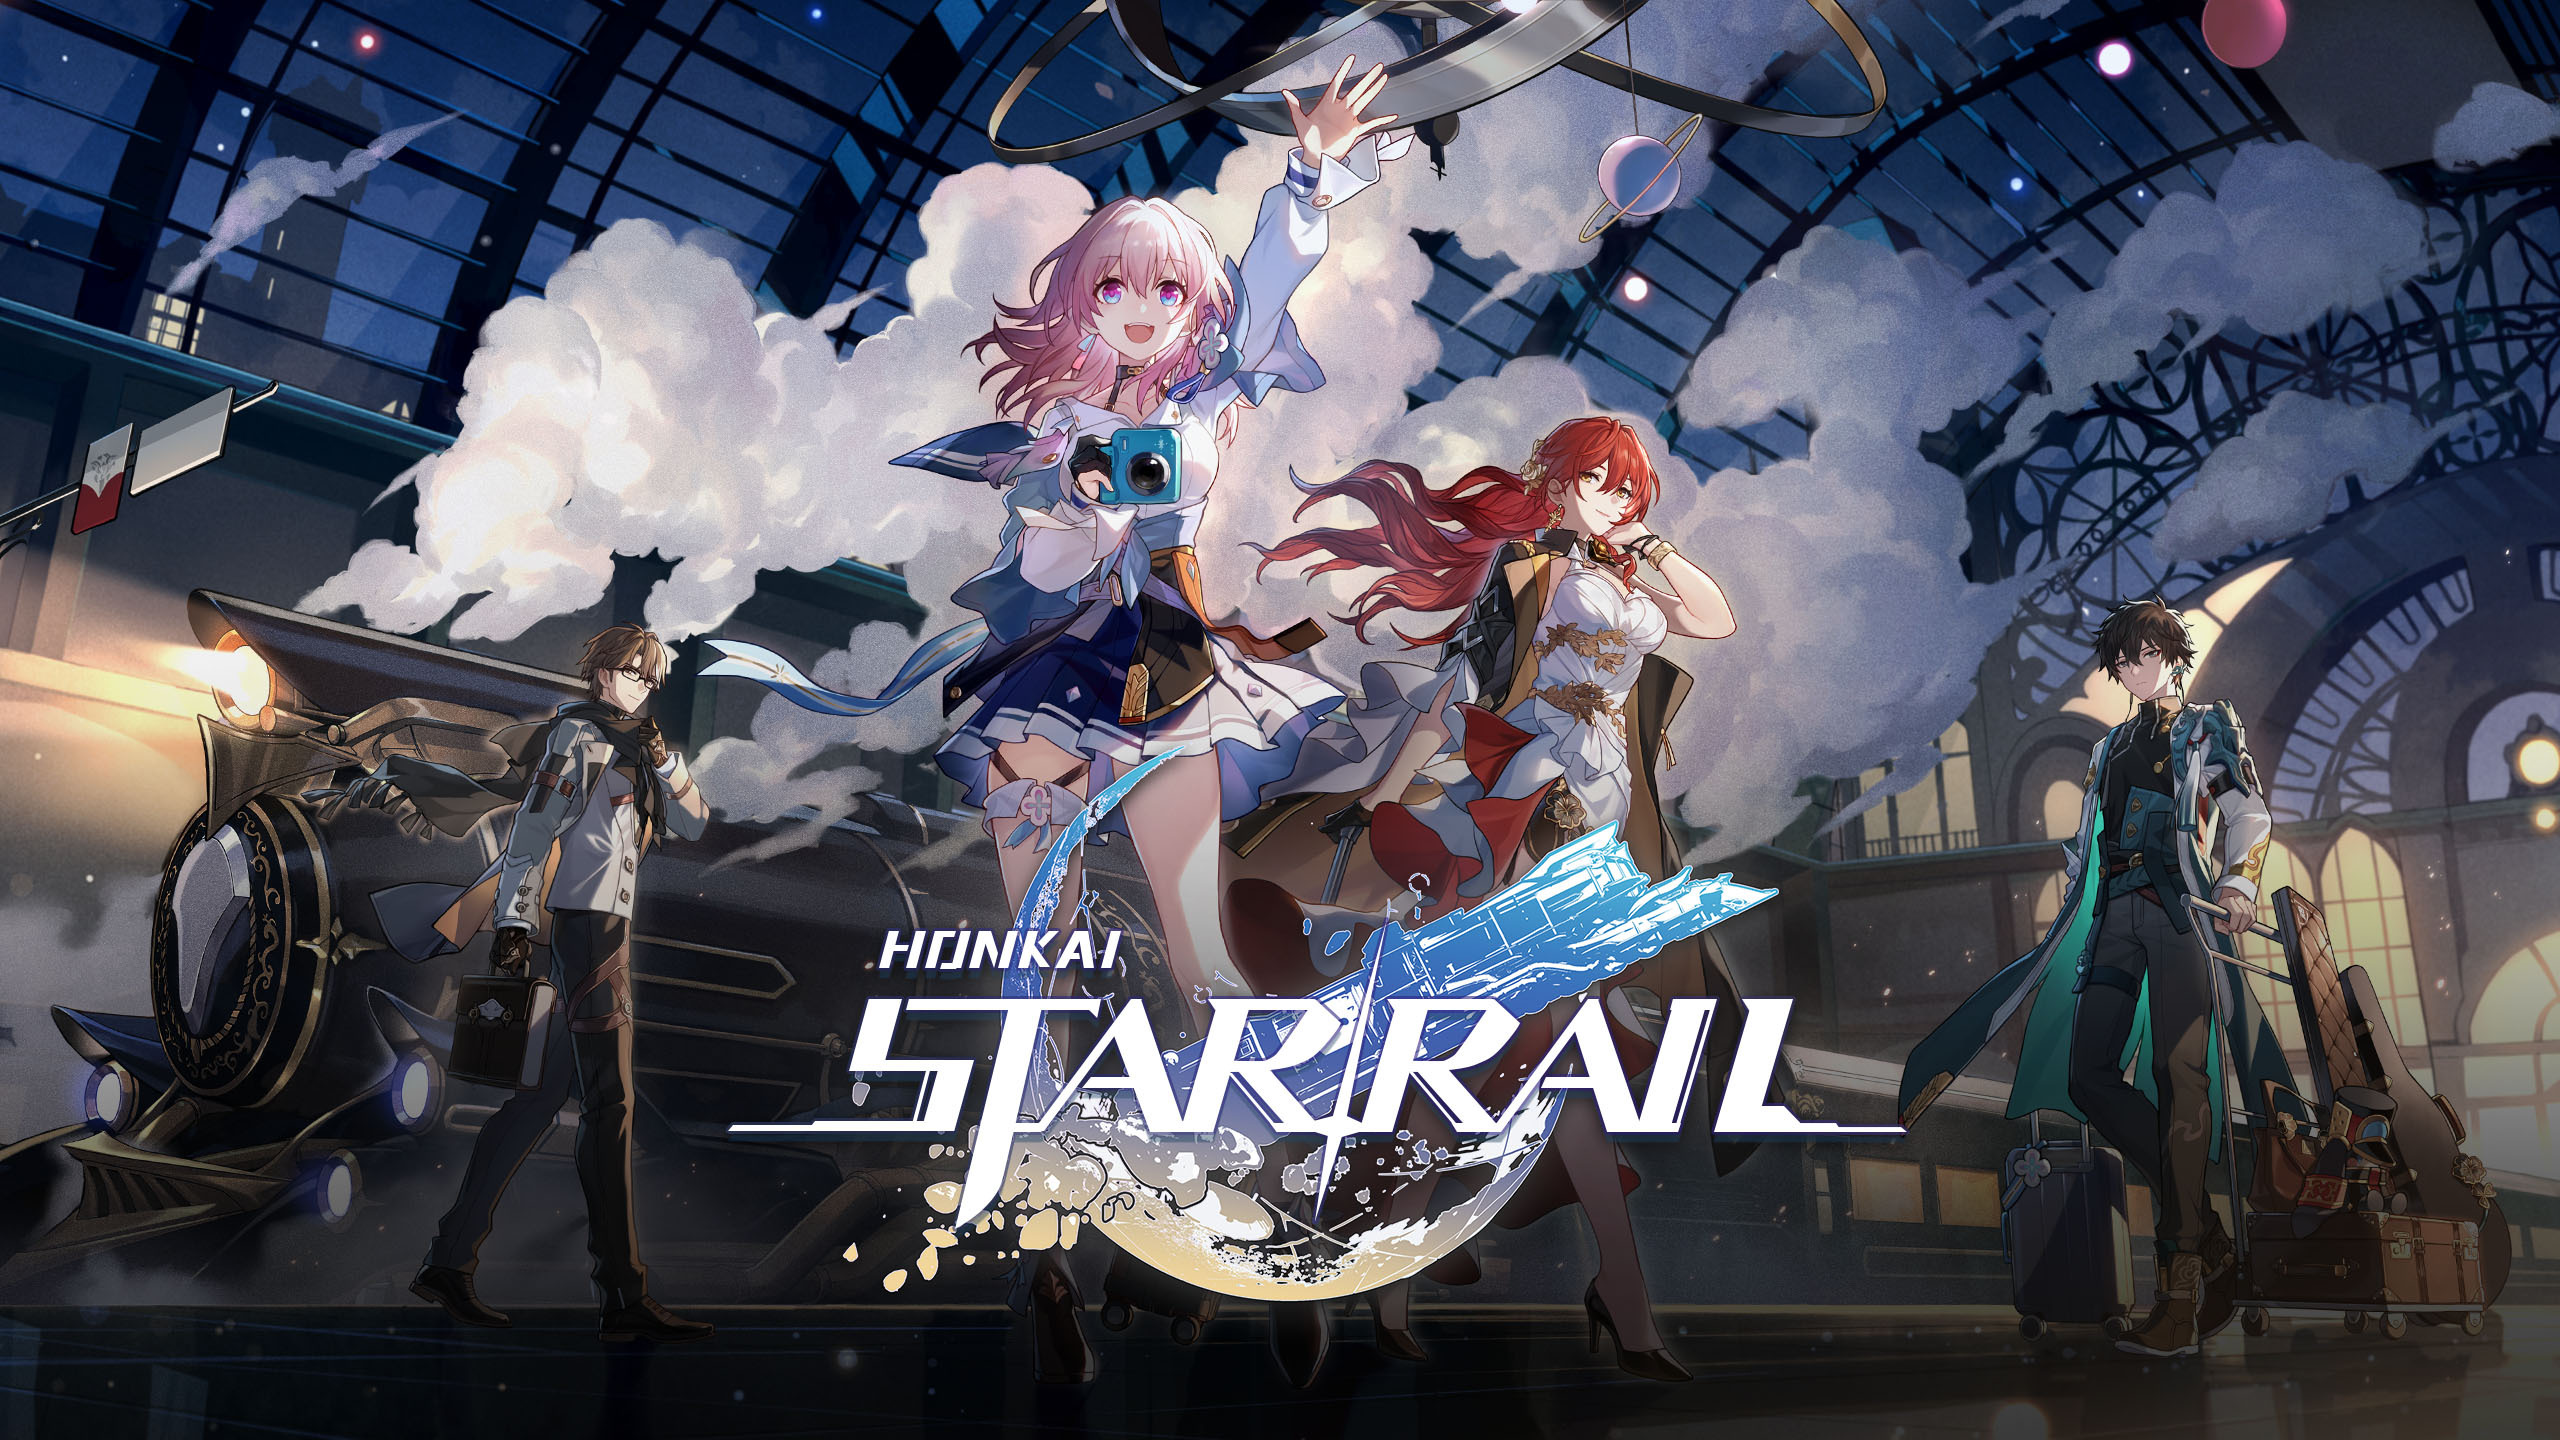 honkai impact star rail release date